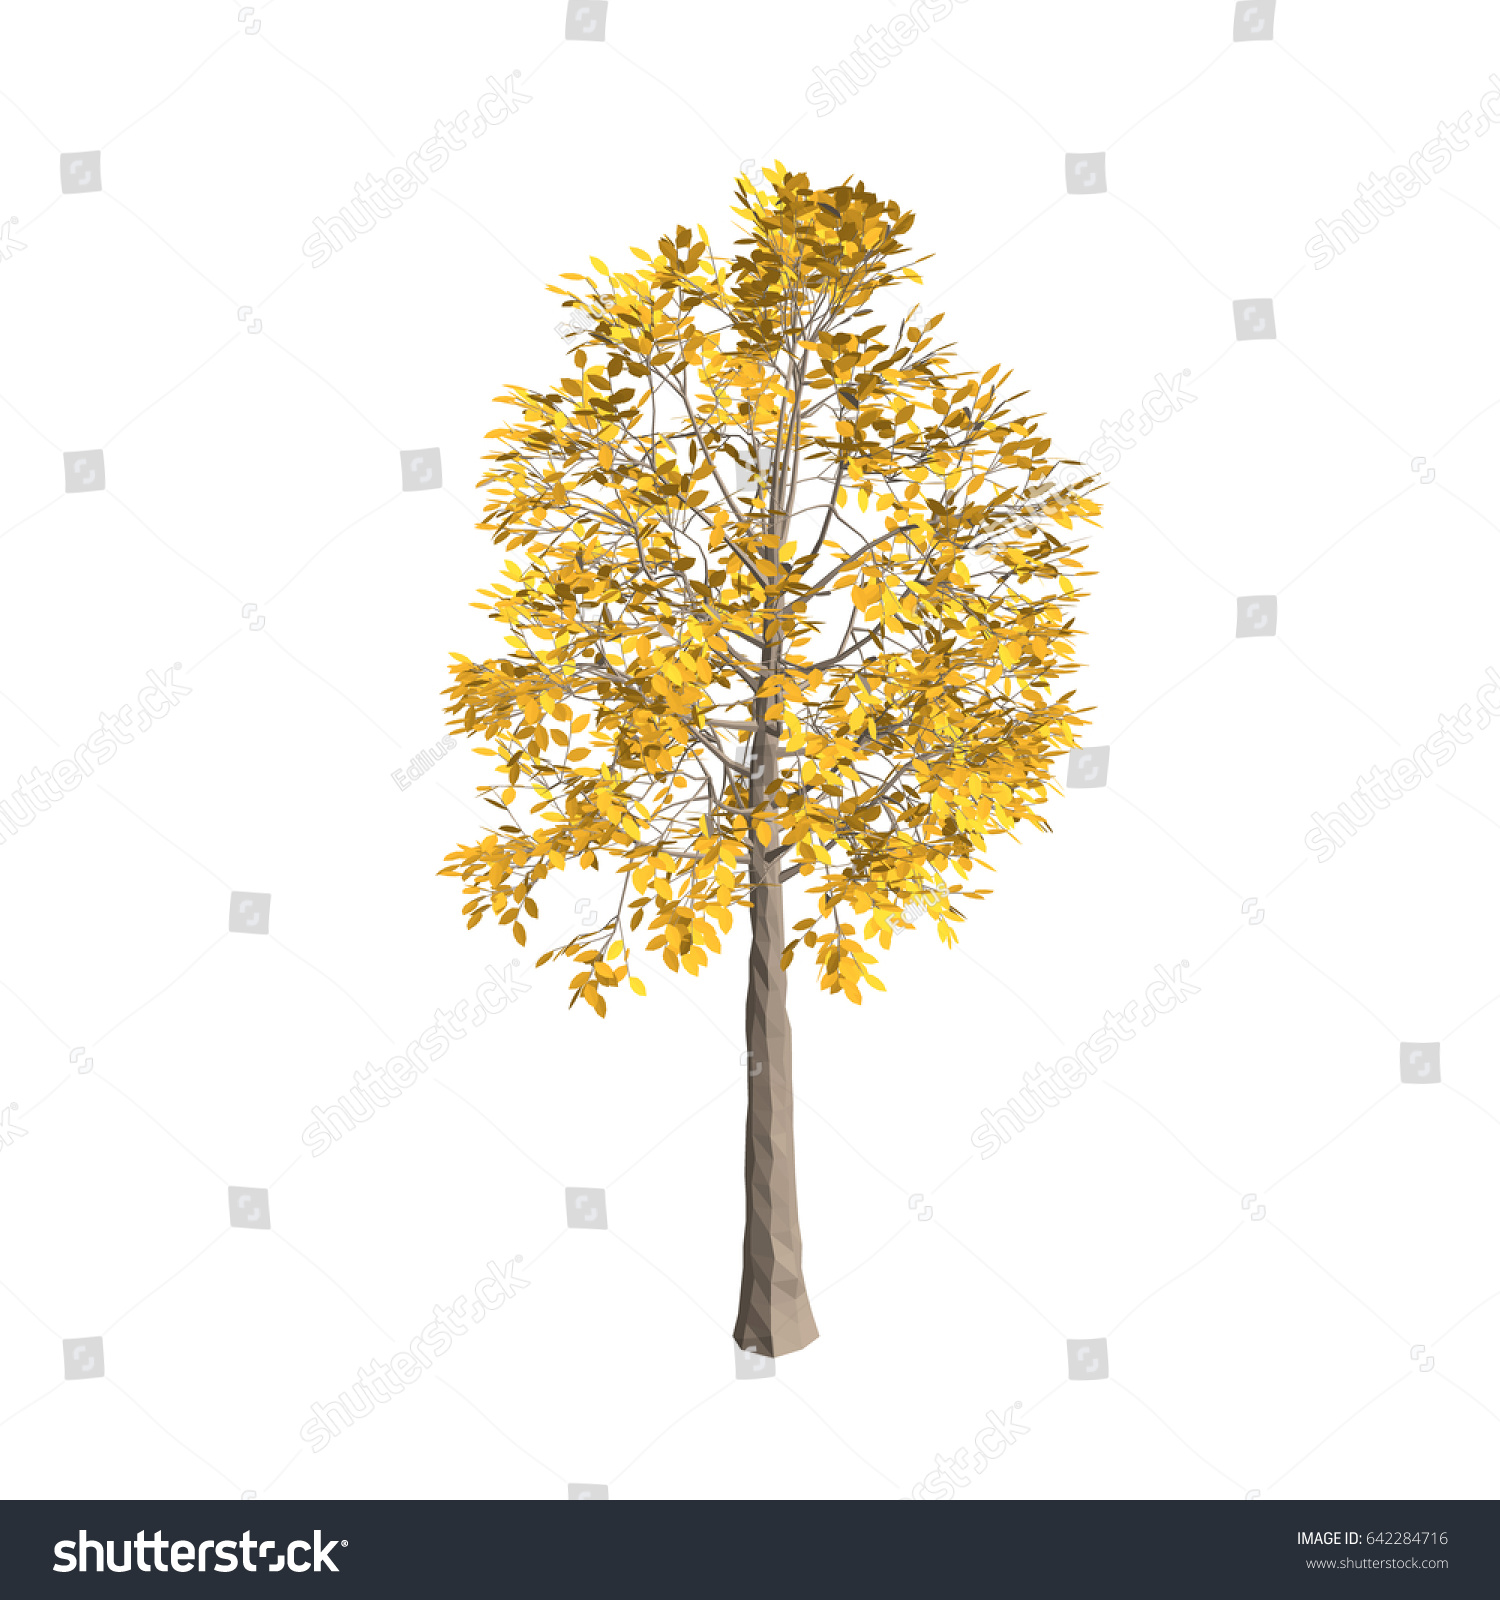 SVG of Aspen tree. Isolated on white background. 3d Vector illustration.  svg